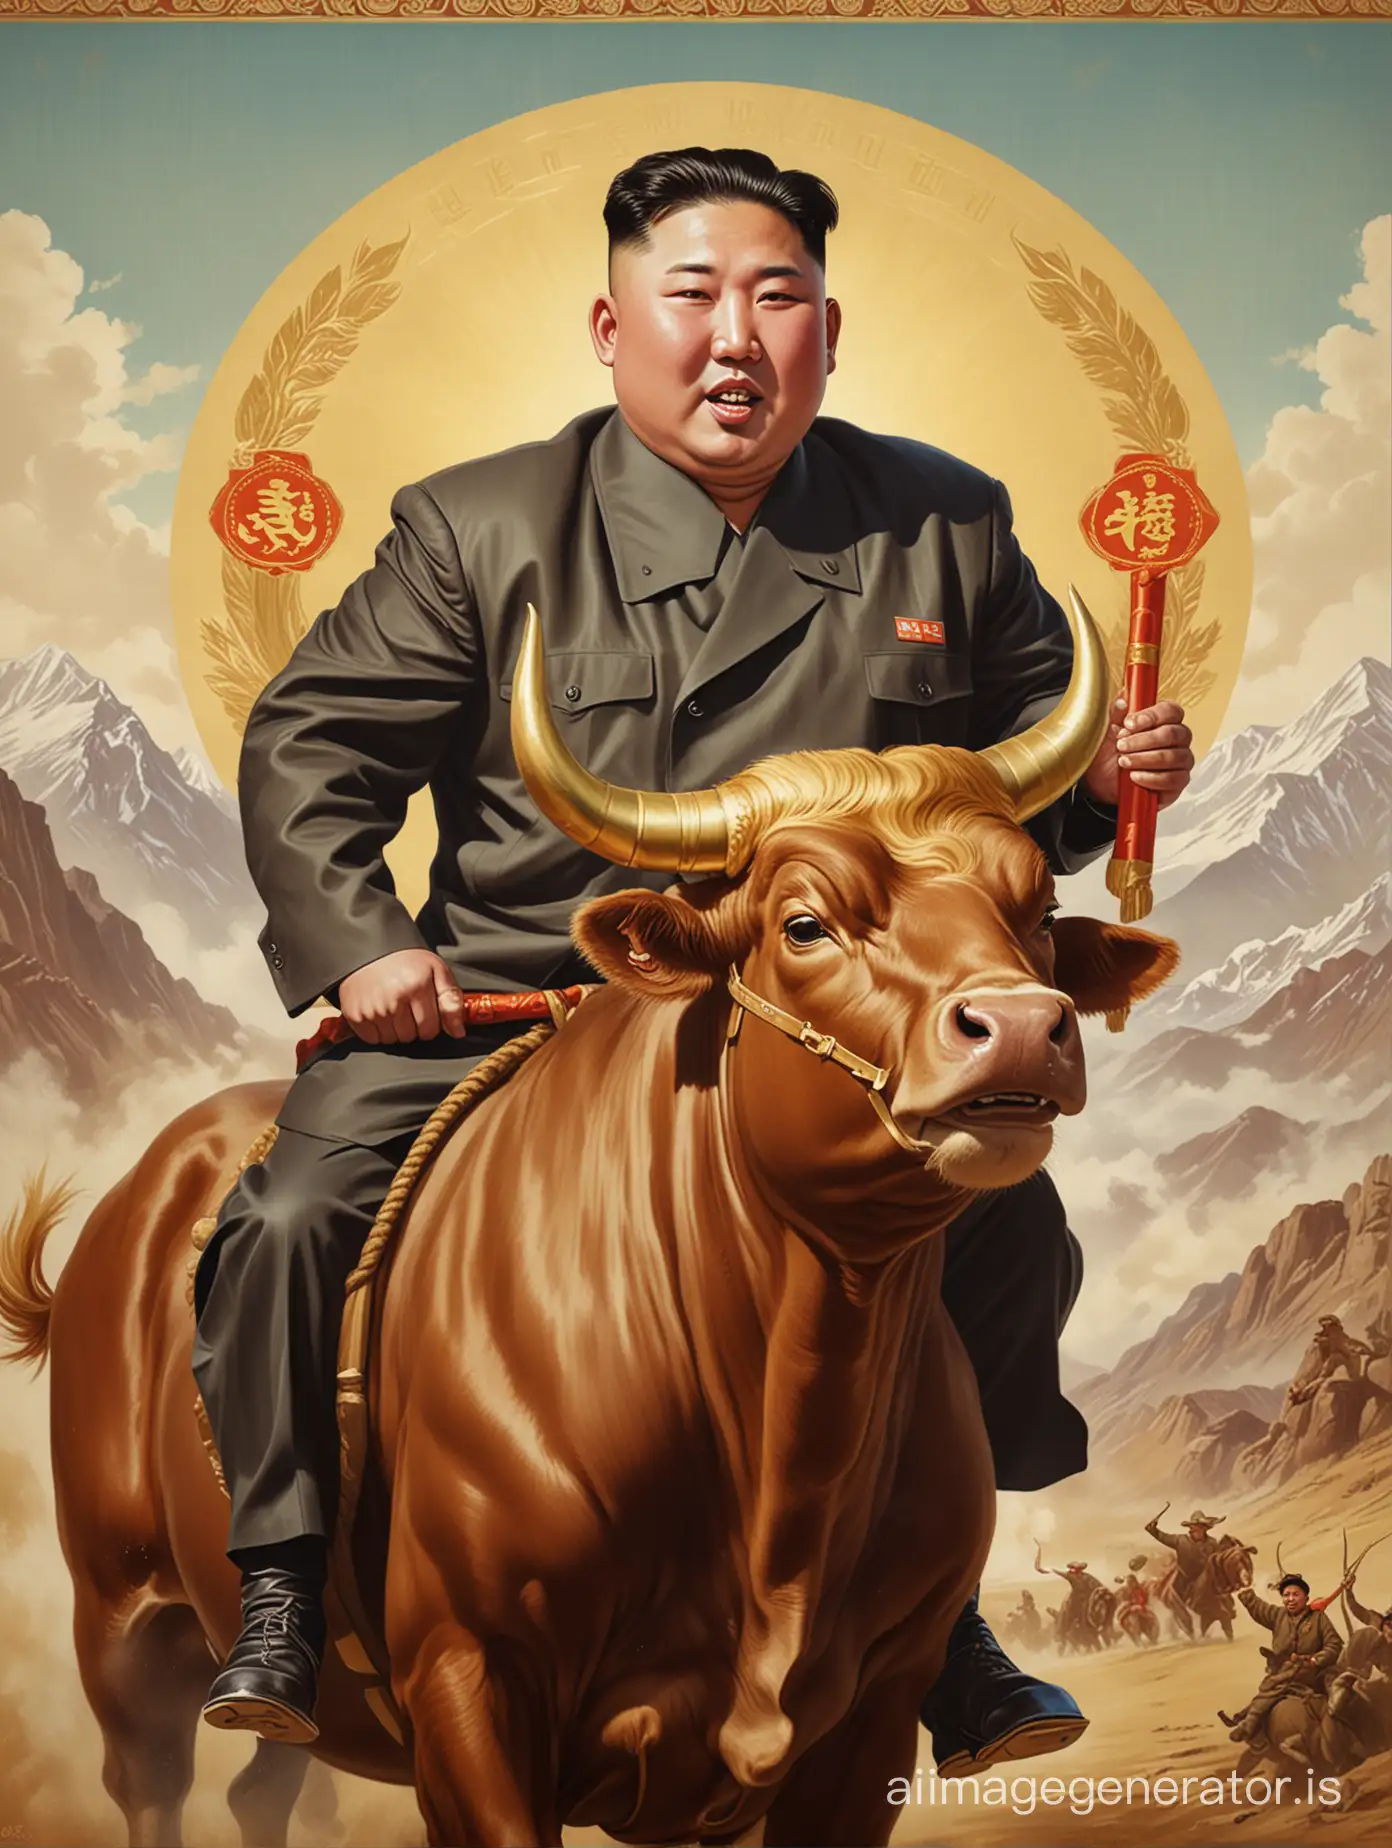 Kim-Jong-Un-Riding-Bull-with-Gold-Horns-Vintage-Propaganda-Portrait